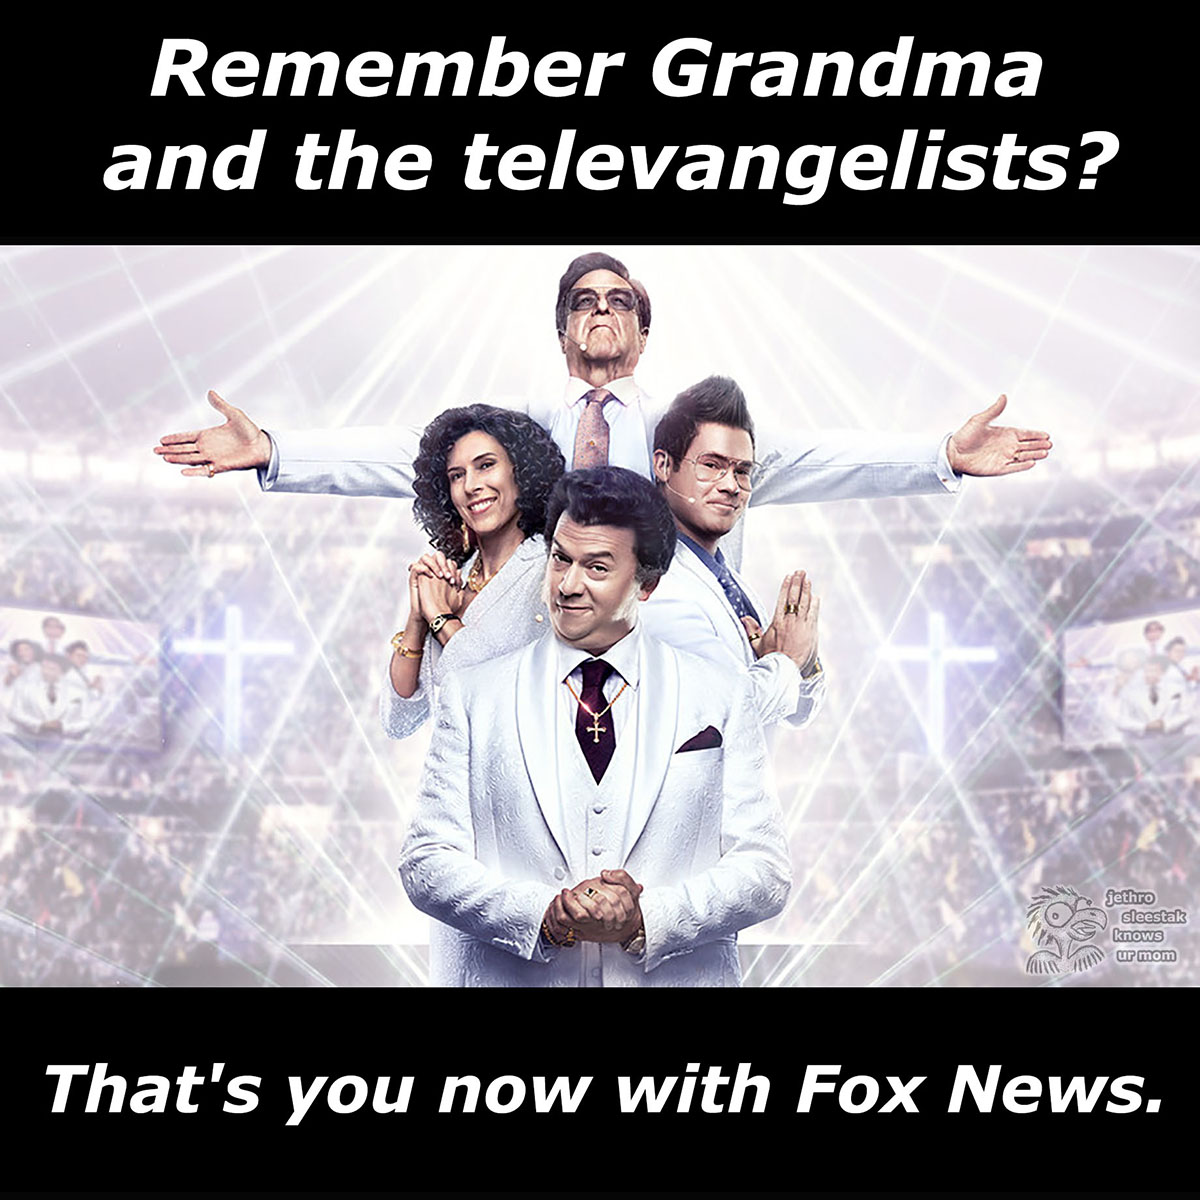 meme-televangelists-grandma-fox-news